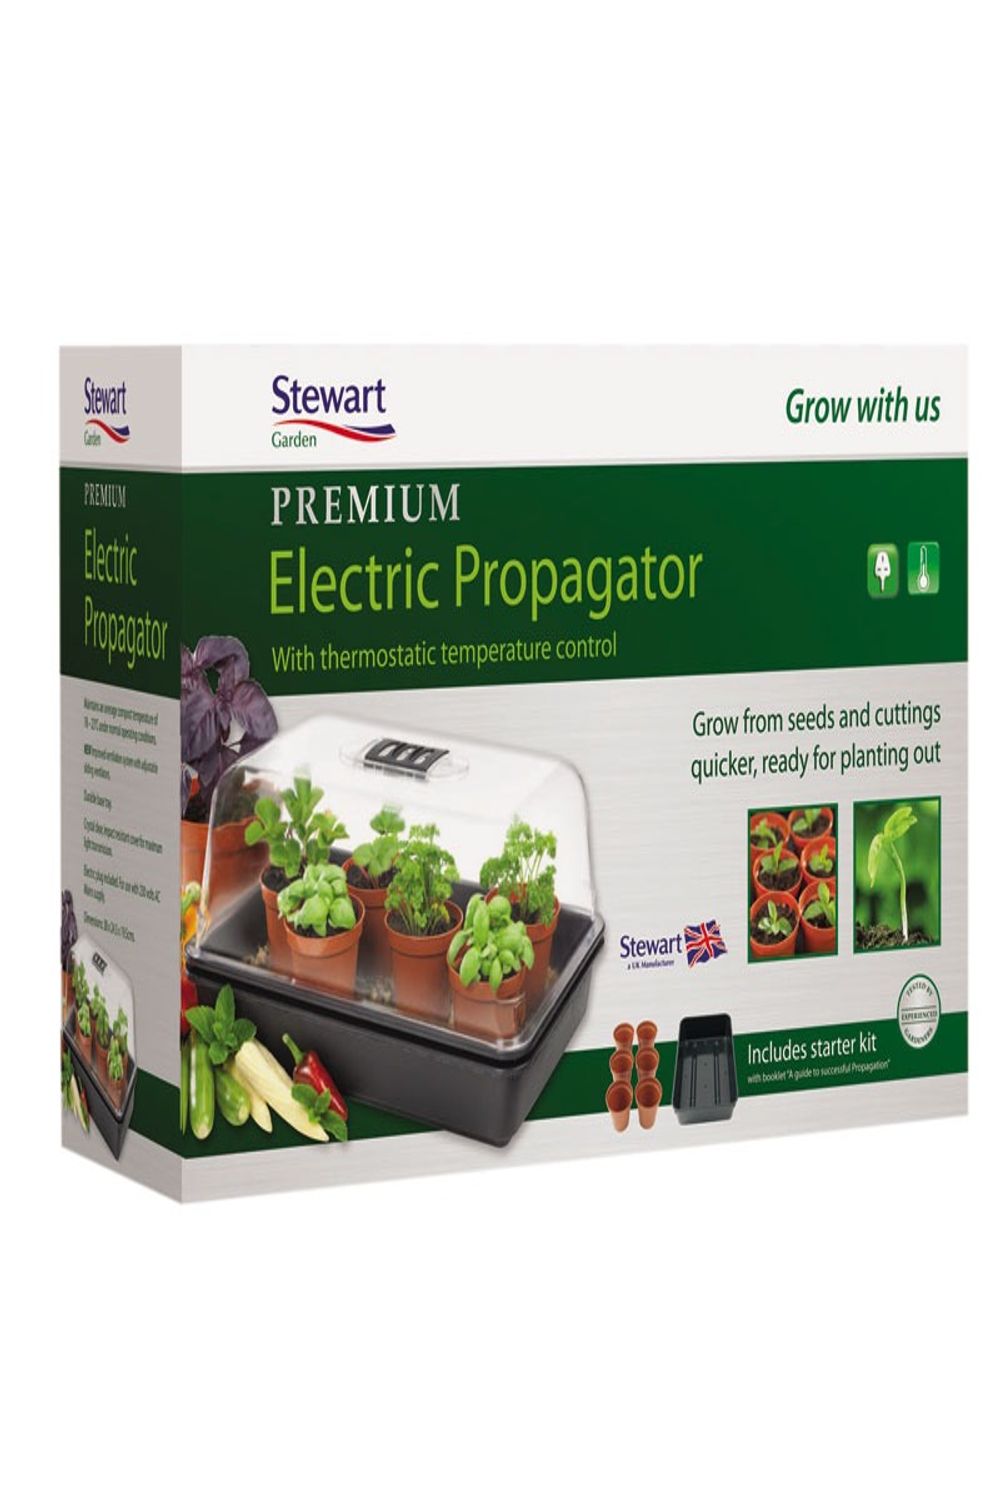 Stewart Plastic Garden Outdoor 38cm Thermostatic Control Heat and Grow Electric Propagators 2493005